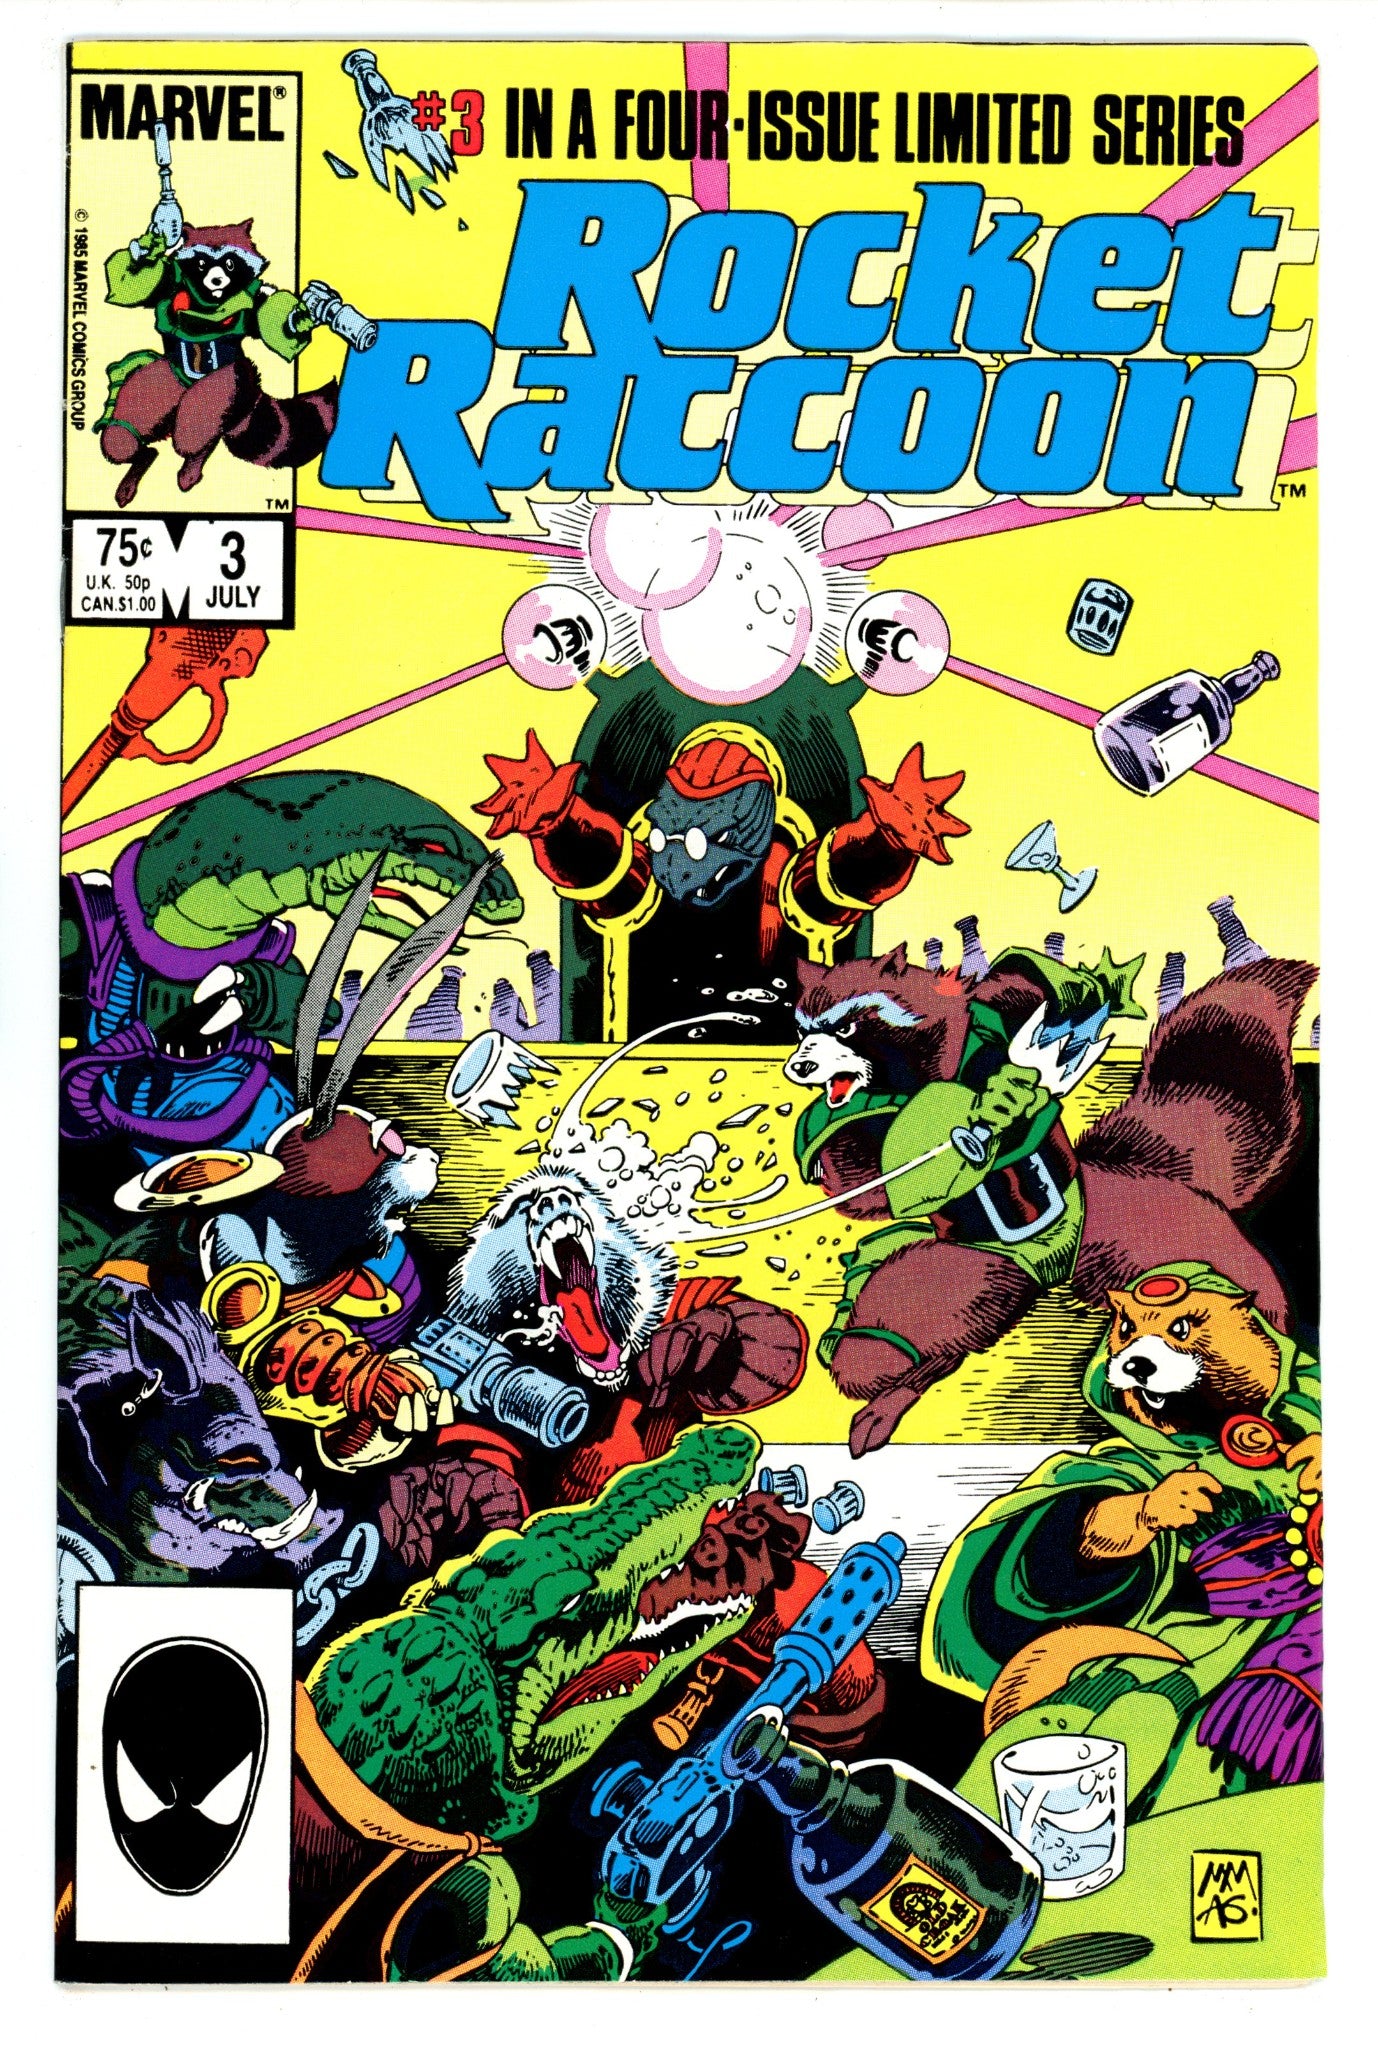 Rocket Raccoon Vol 1 3 FN+ (6.5) (1985) 